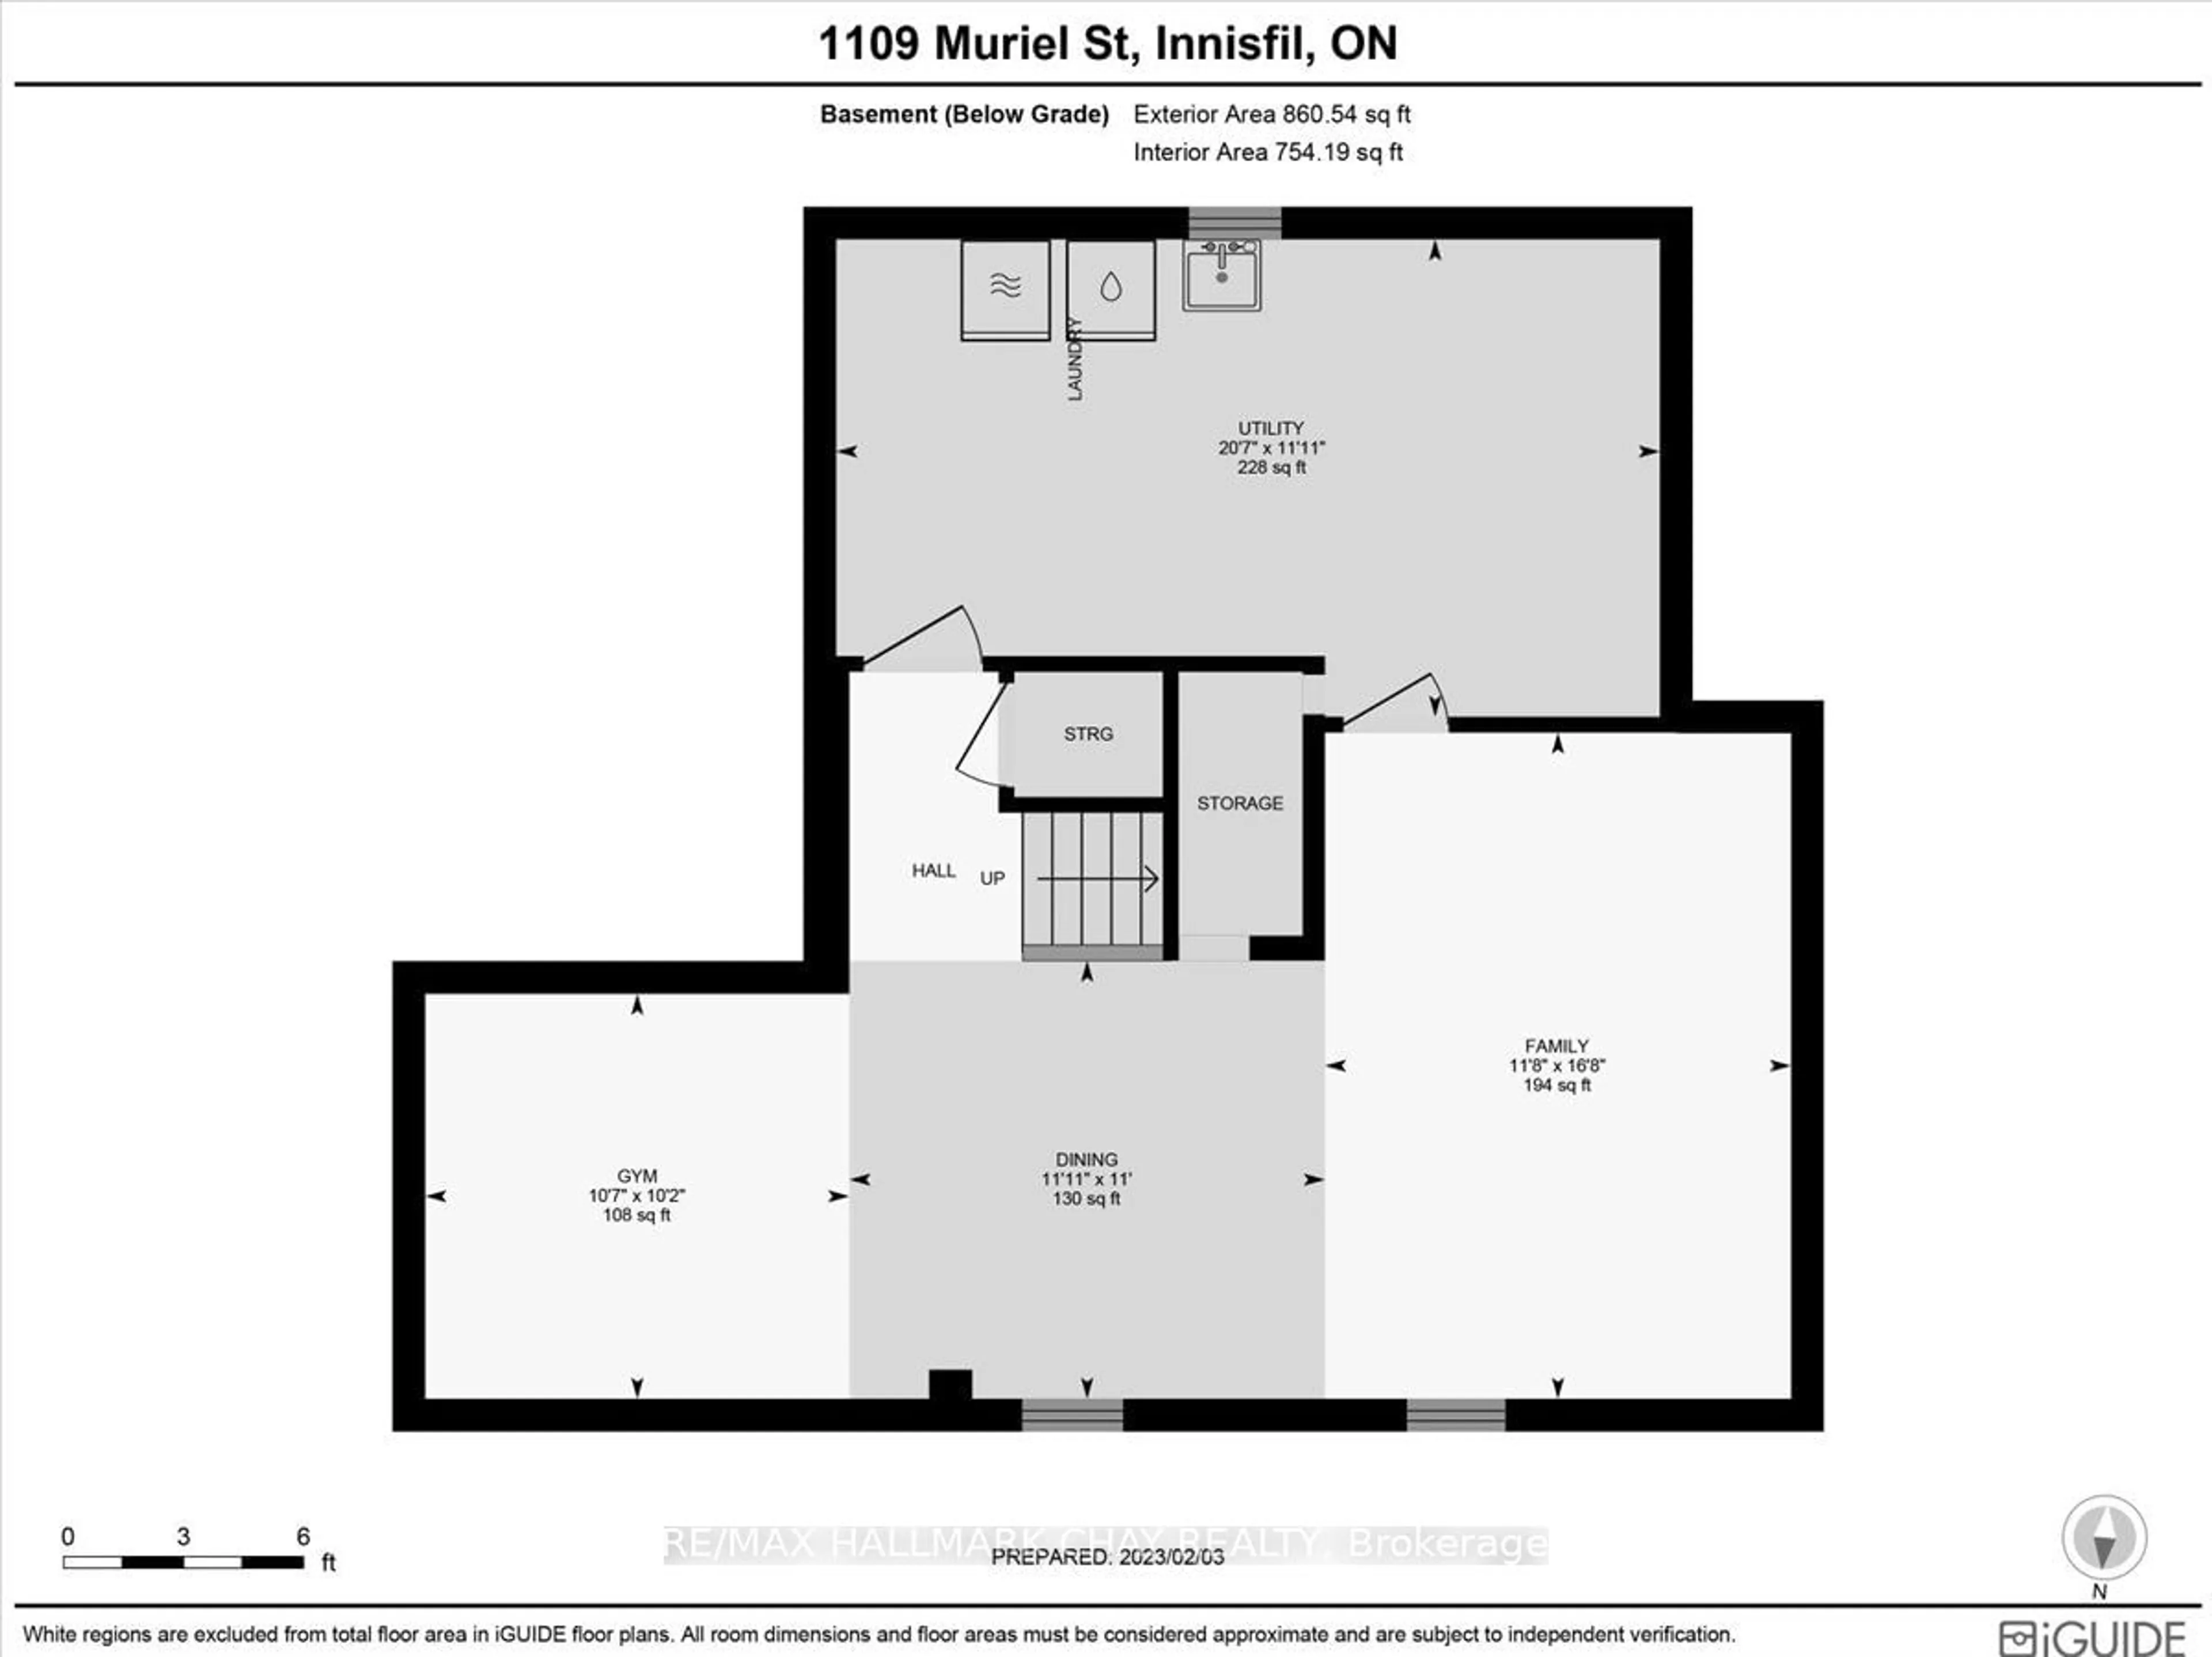 Floor plan for 1109 Muriel St, Innisfil Ontario L9S 4W5